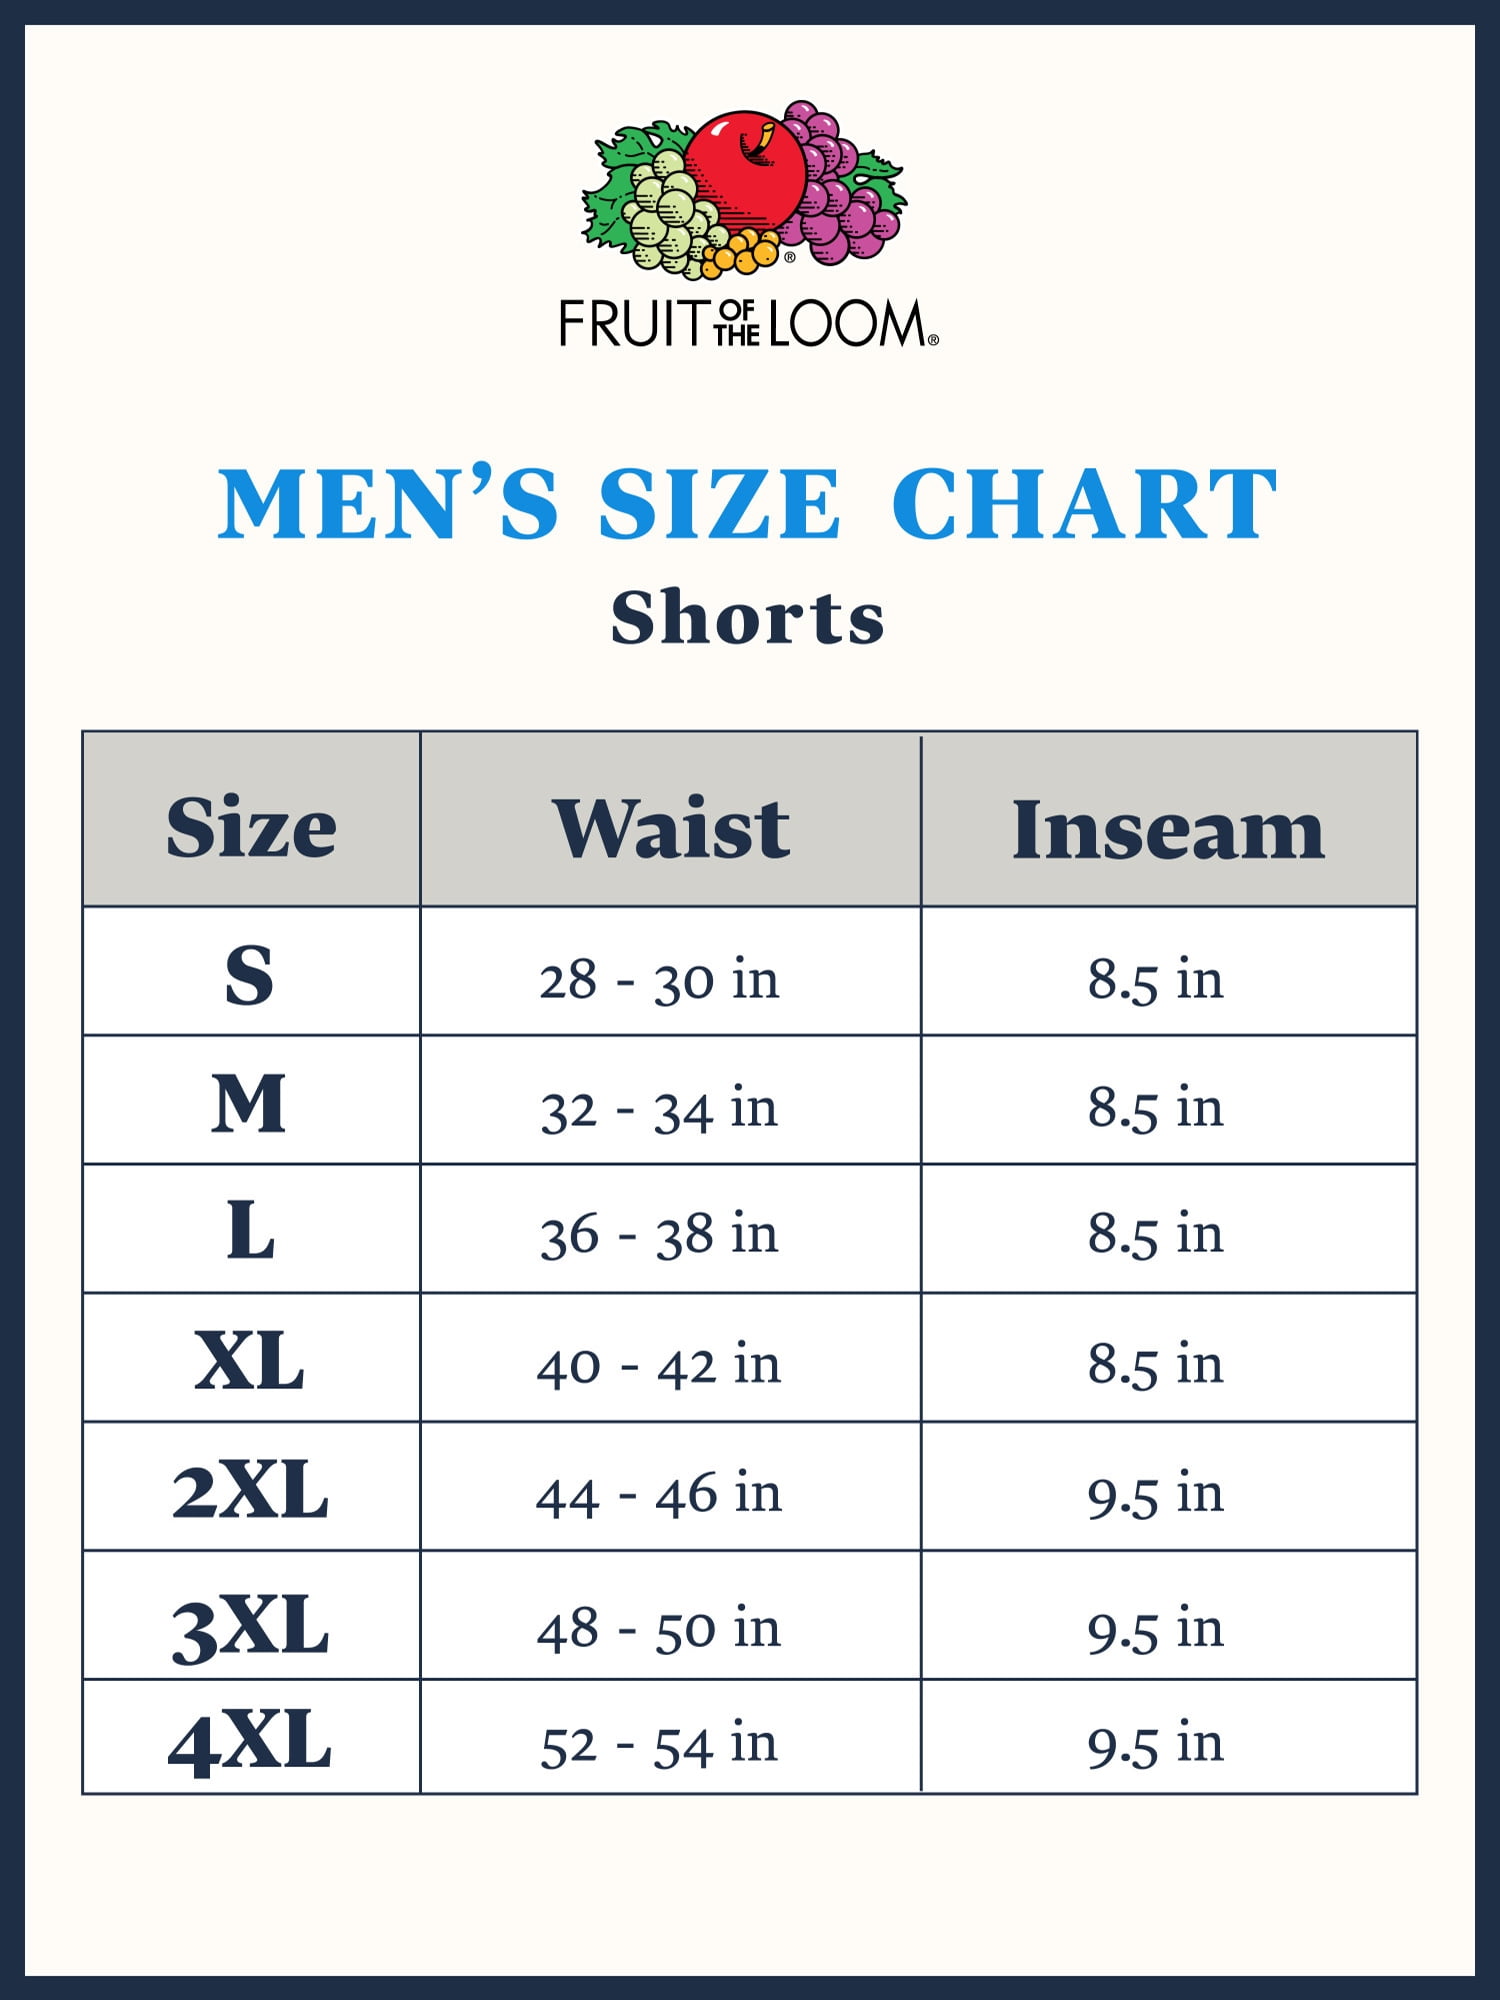 Fruit of the Loom Men's 360 Breathe Jersey Shorts, 8.5-9.5 Inseam